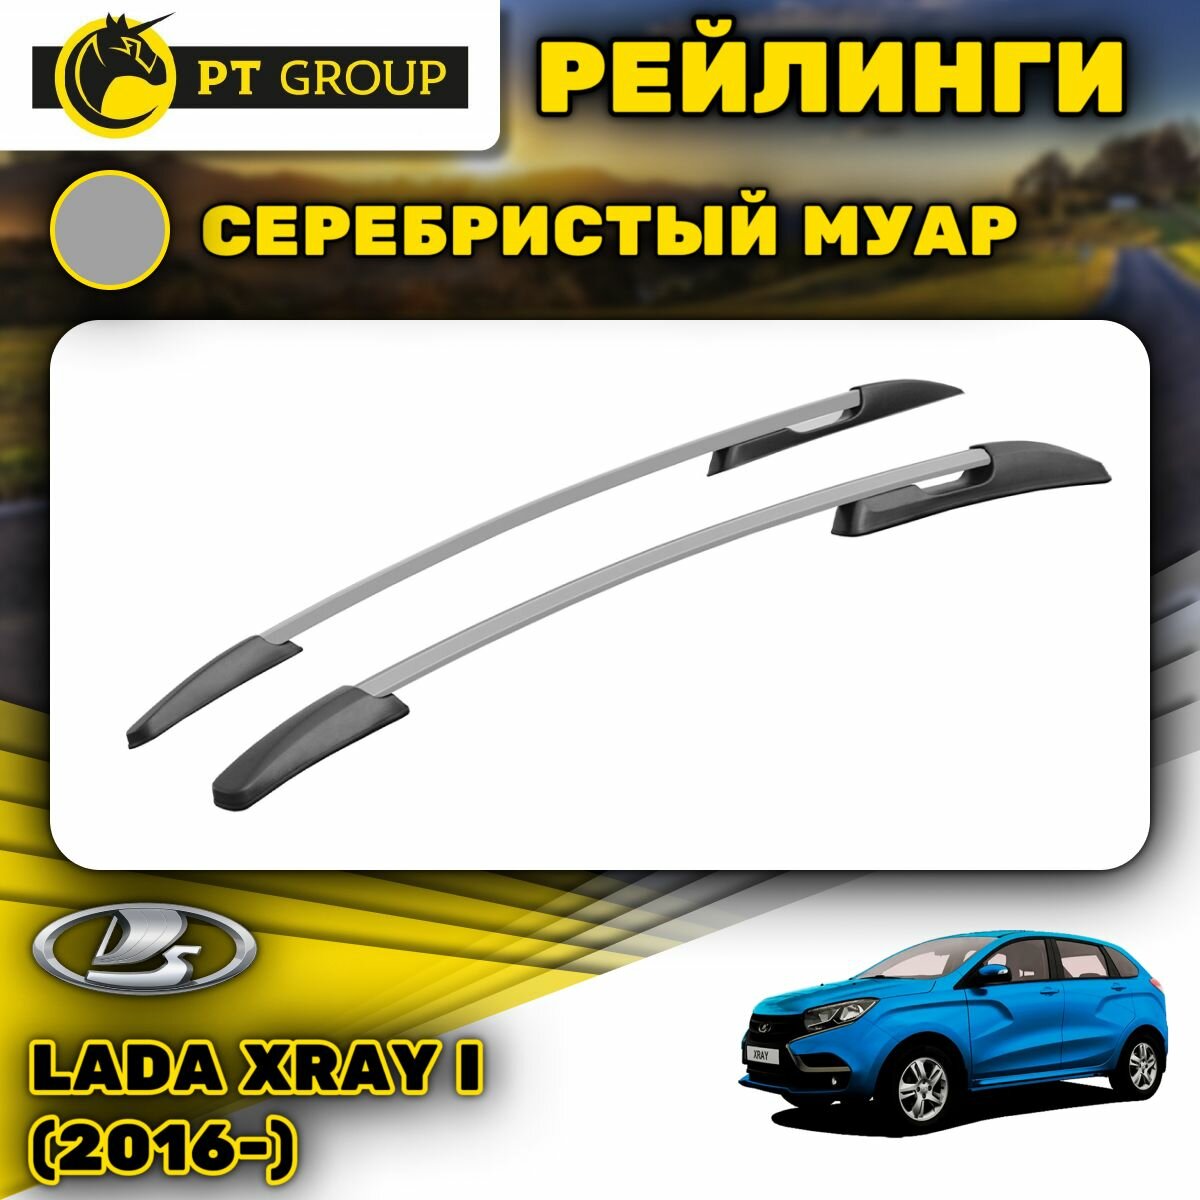 Рейлинги ПТ Групп для Lada Xray I (2016-) (Лада Икс рей) серебристый муар LXR-16-553022.11